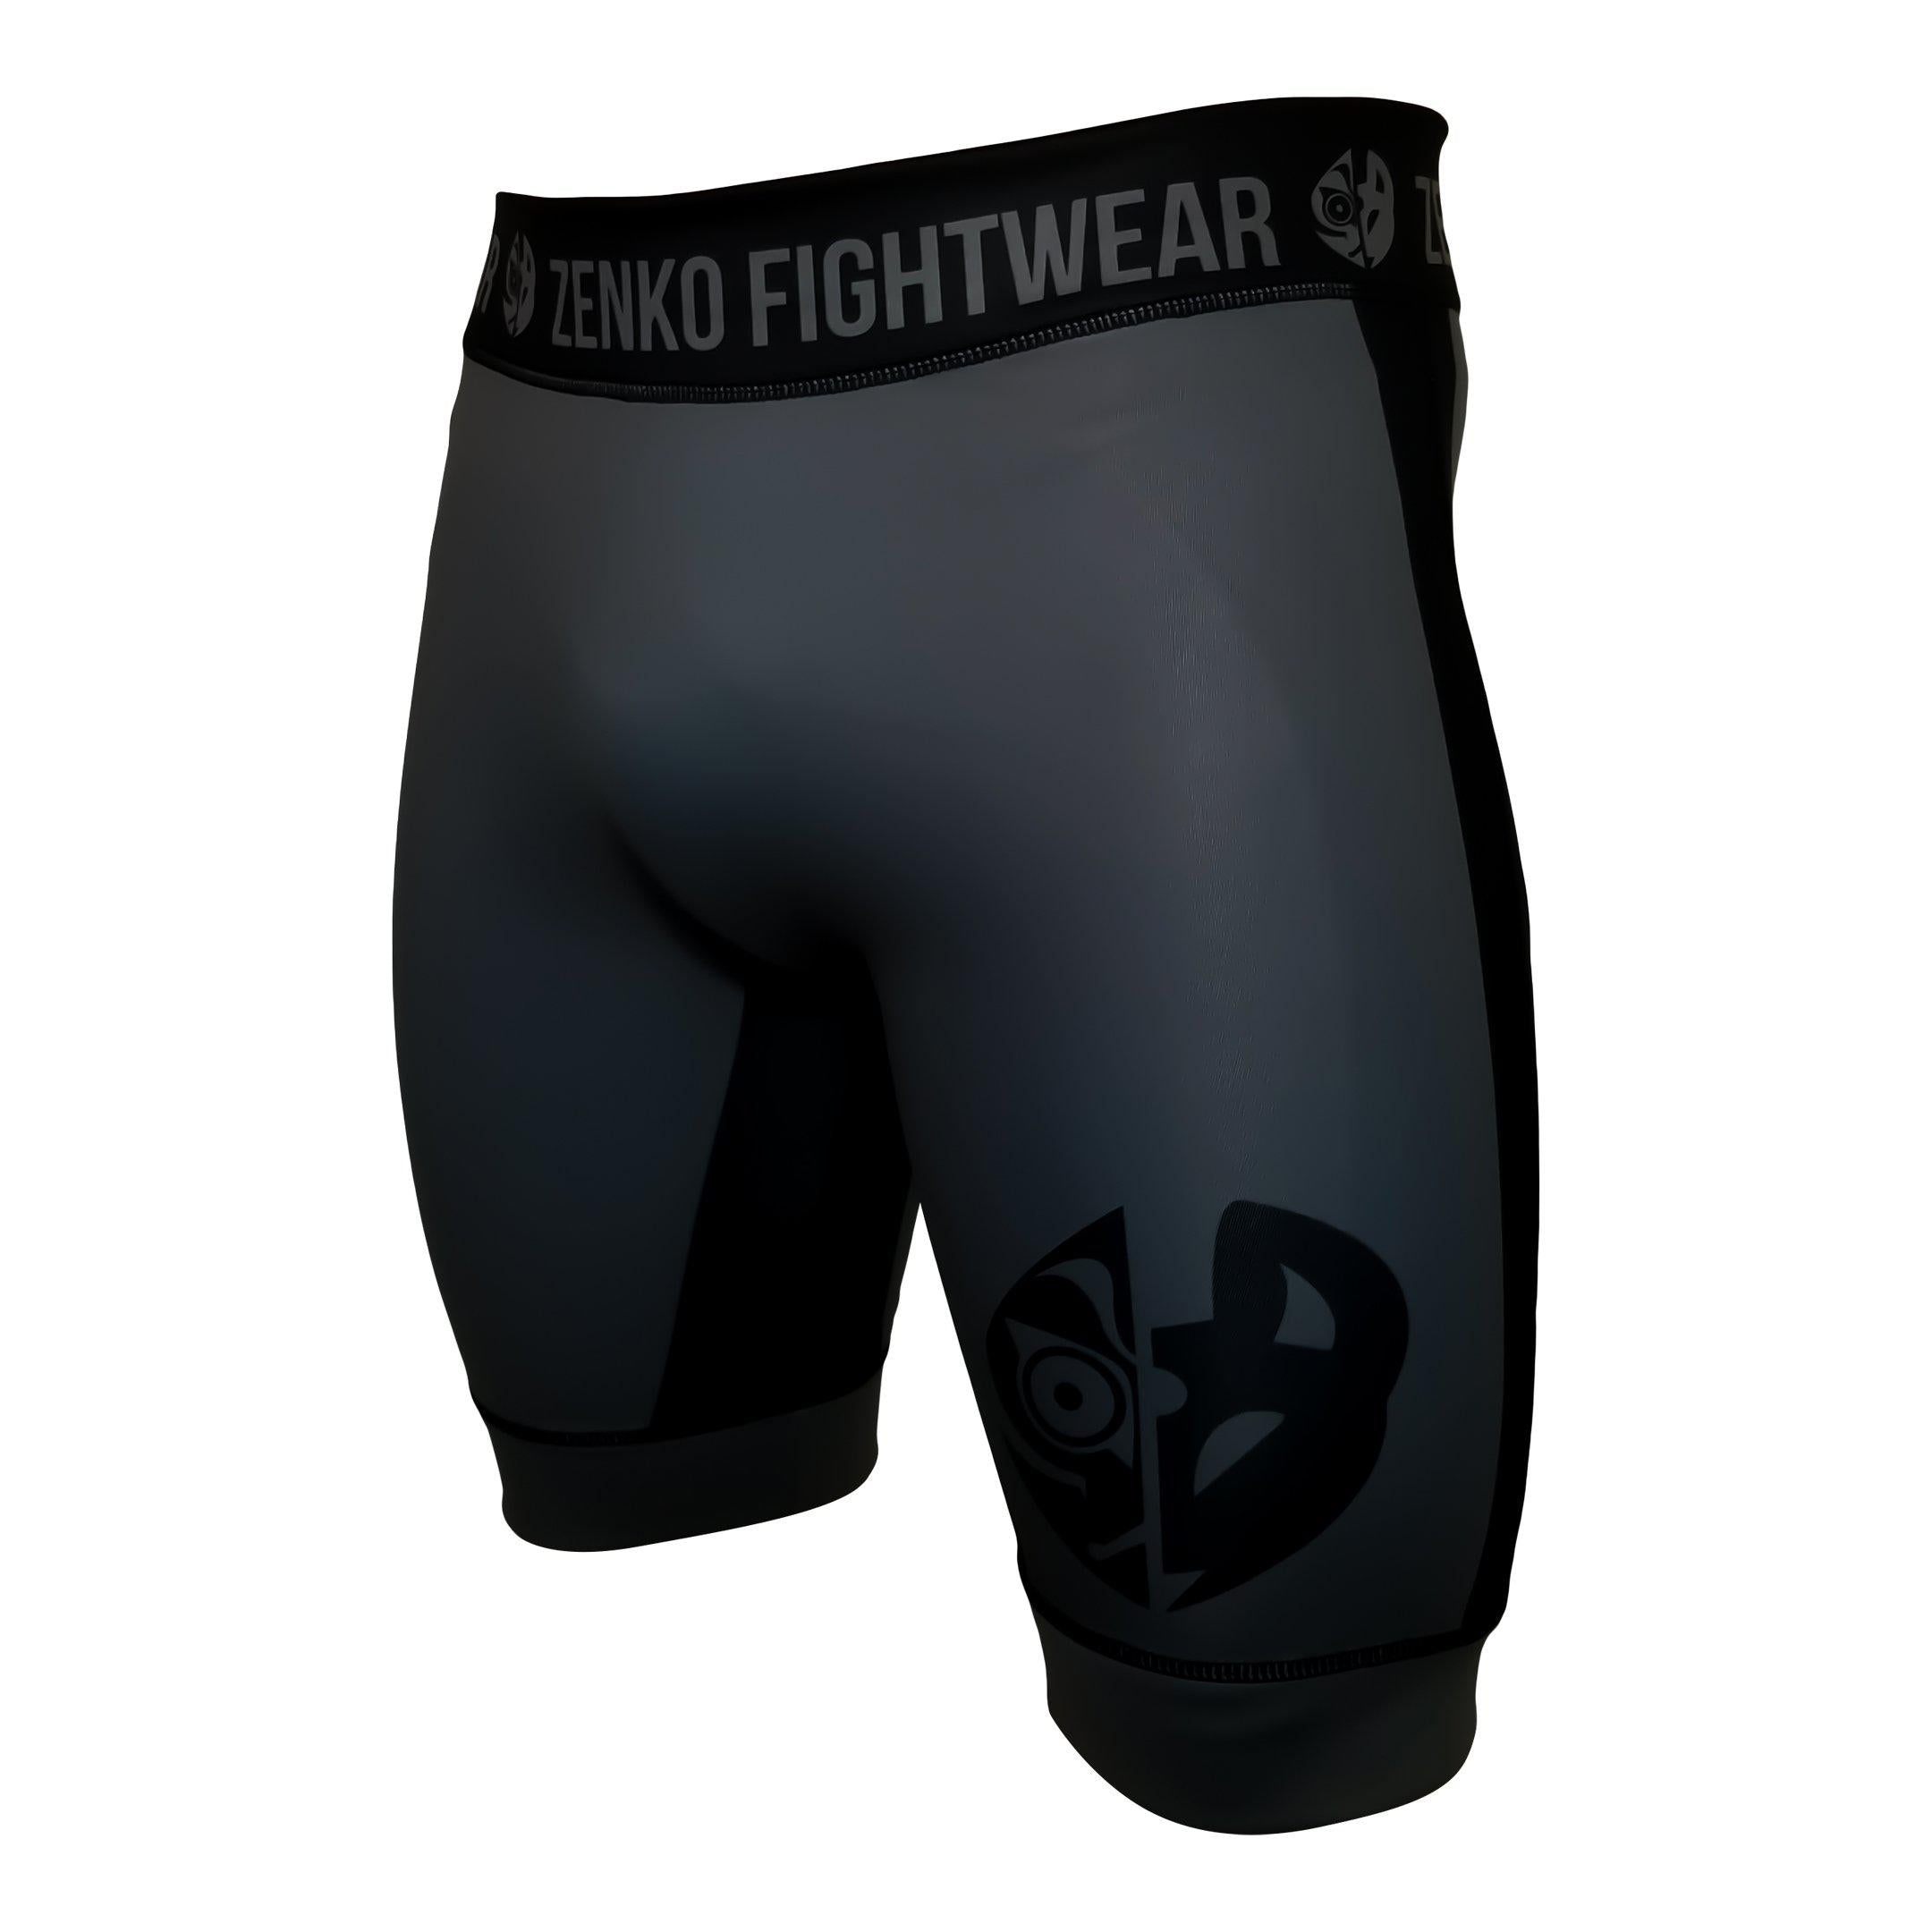 Zenko Fightwear Jet Gray Vale Tudo Compression Shorts Front